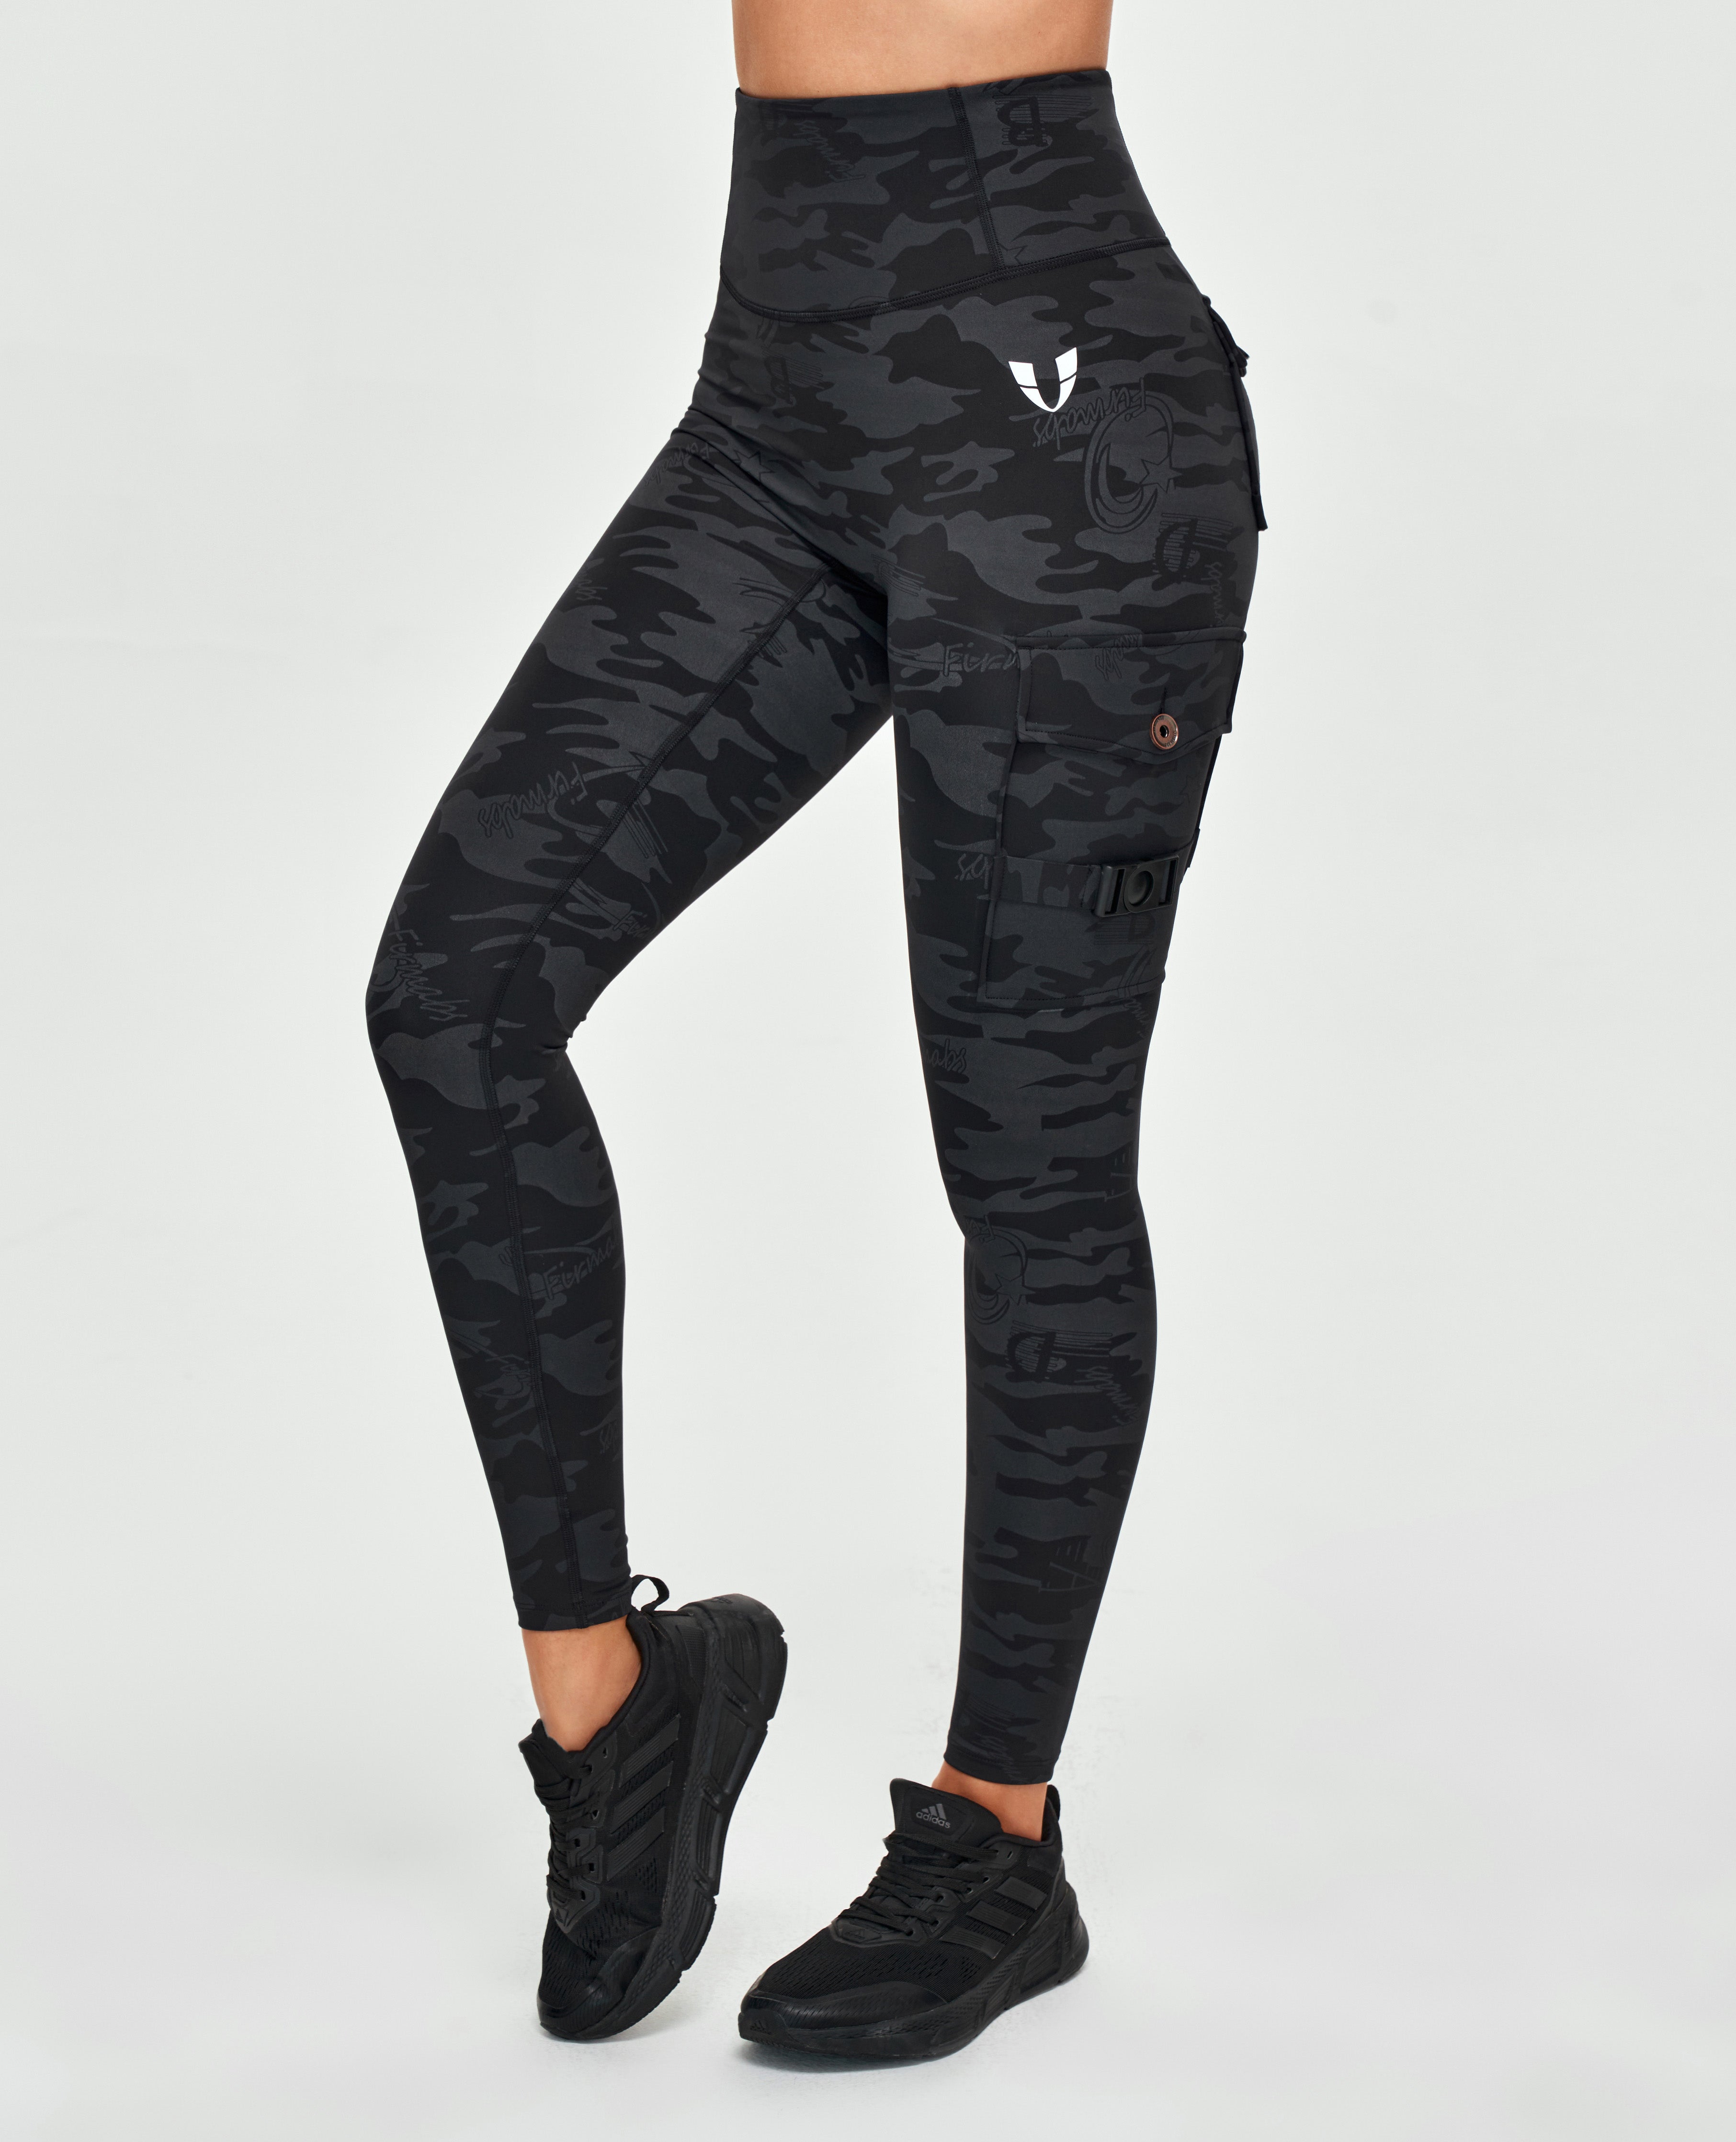 Nike Womens Mid-Rise Camo Leggings - Dri-FIT One Tights X-Small 